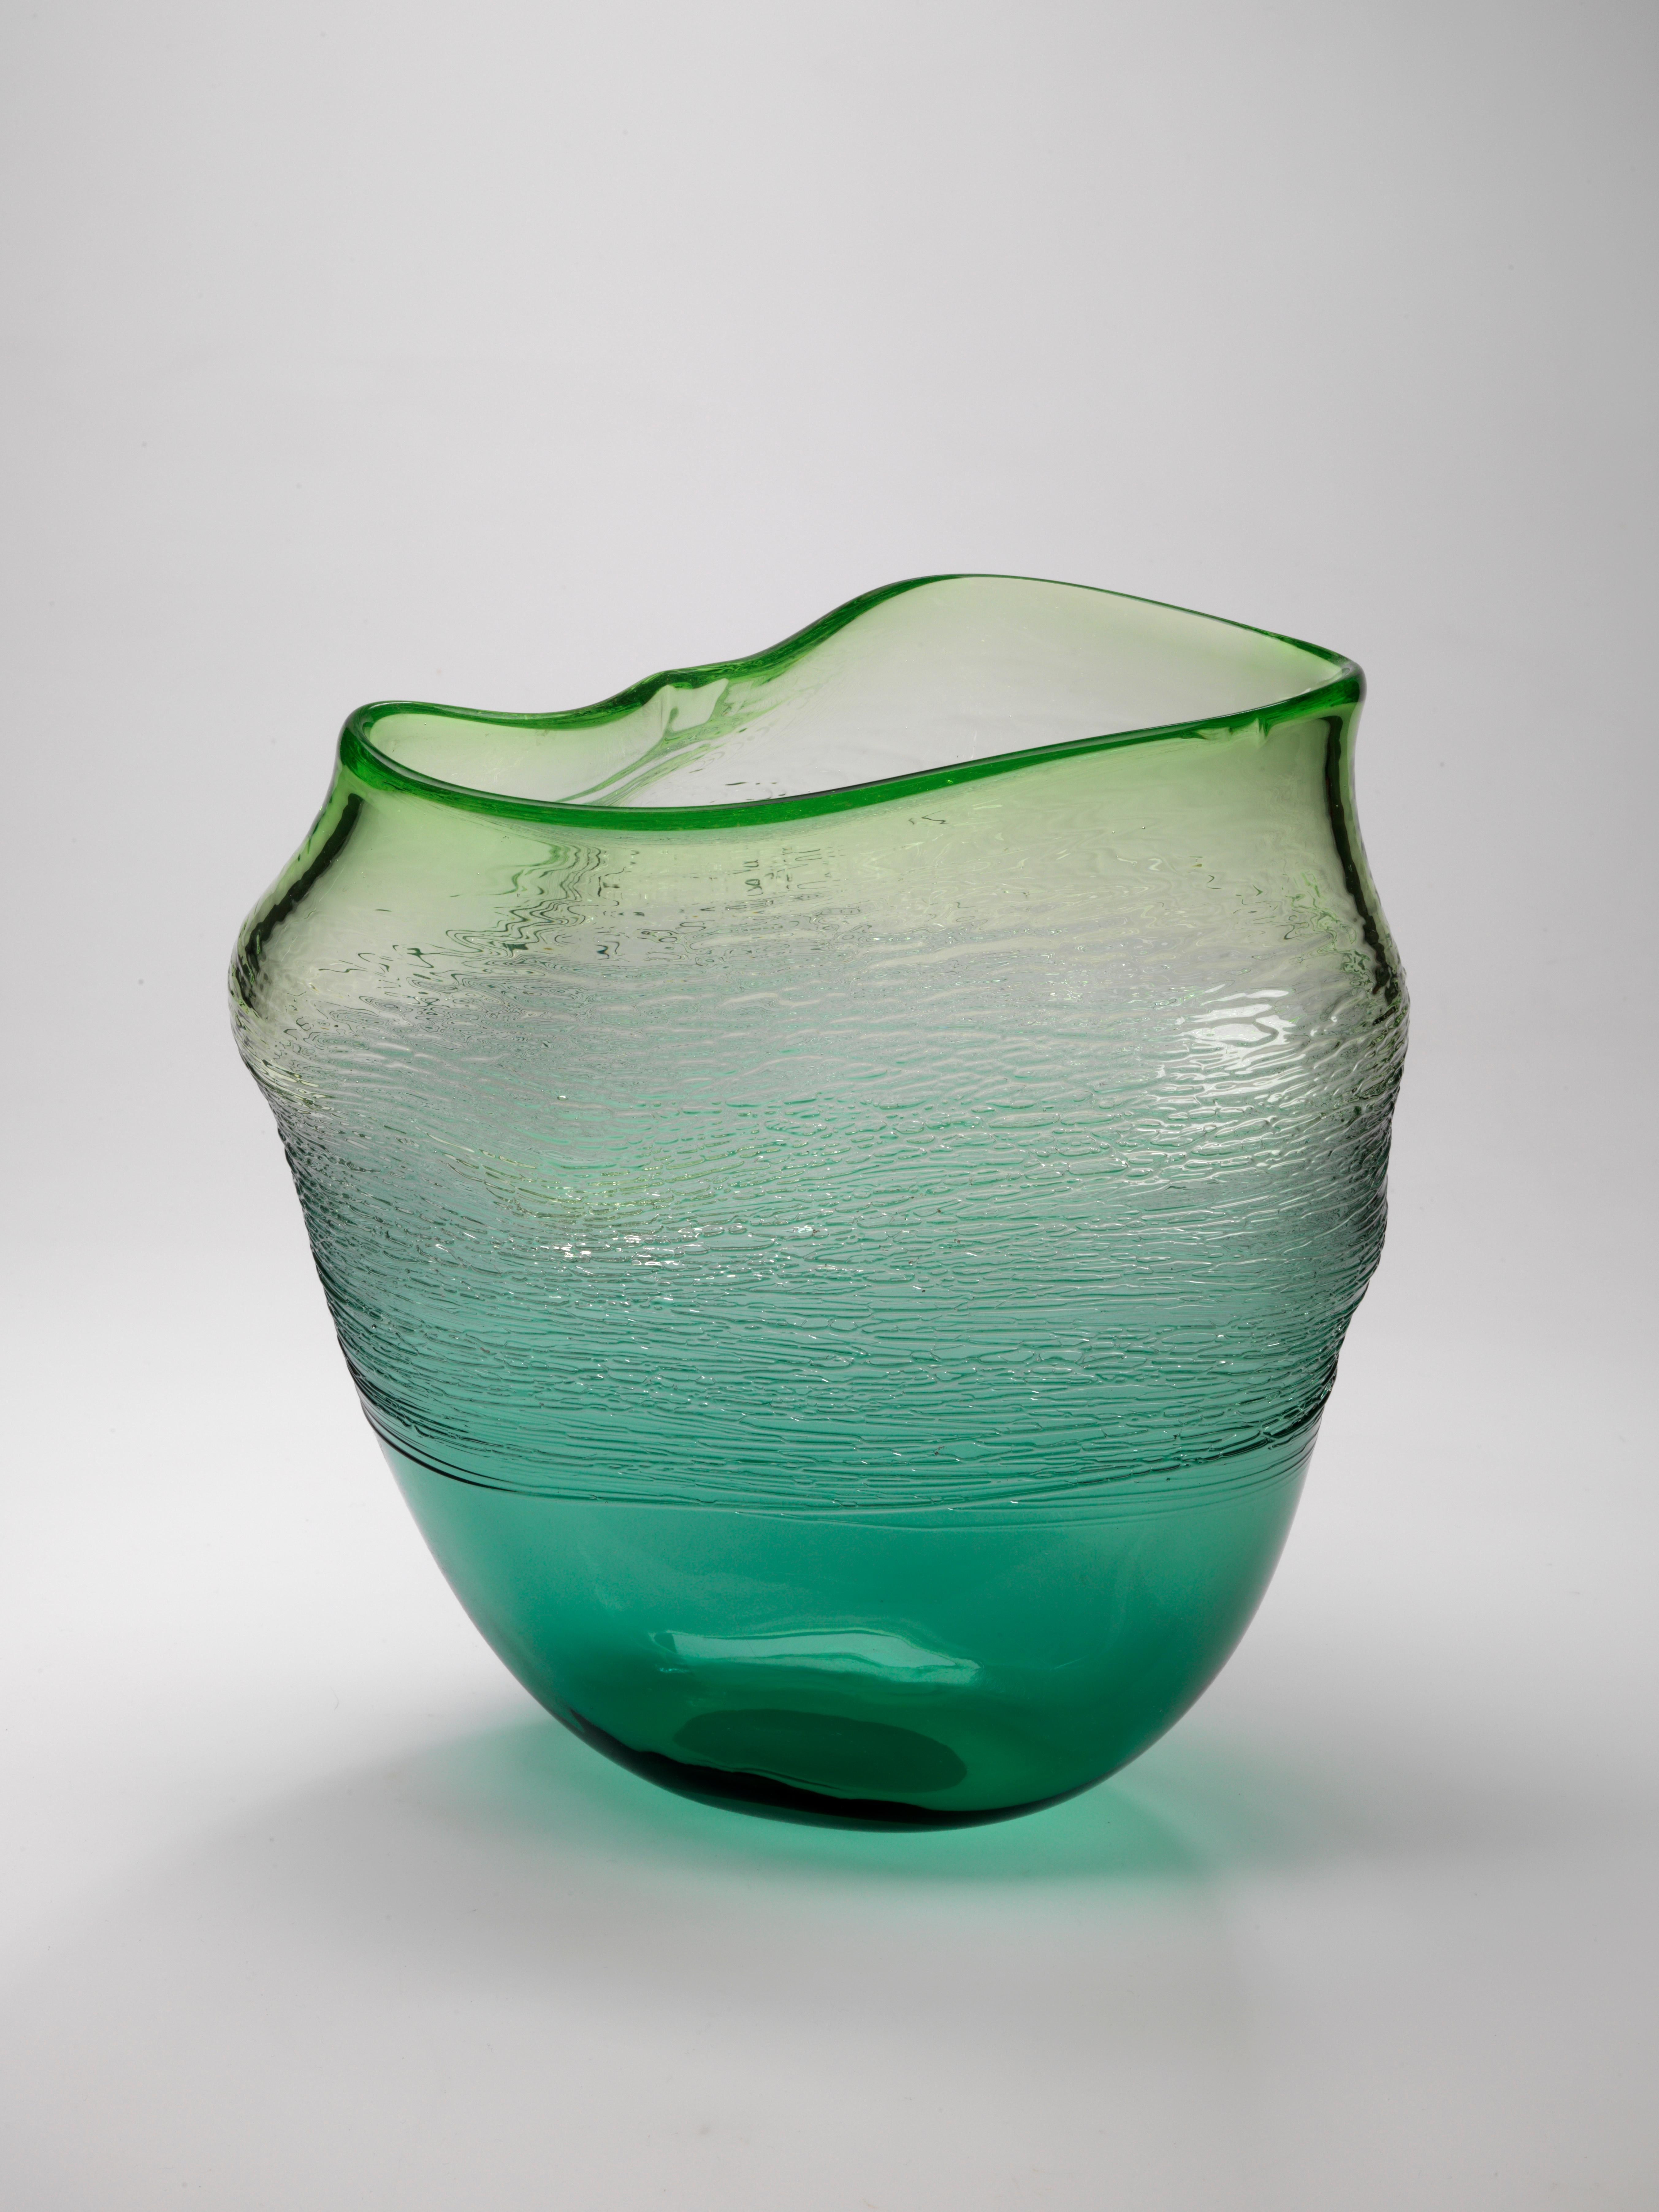 Fluid Form, Green-21st Century Blown Glass Object 